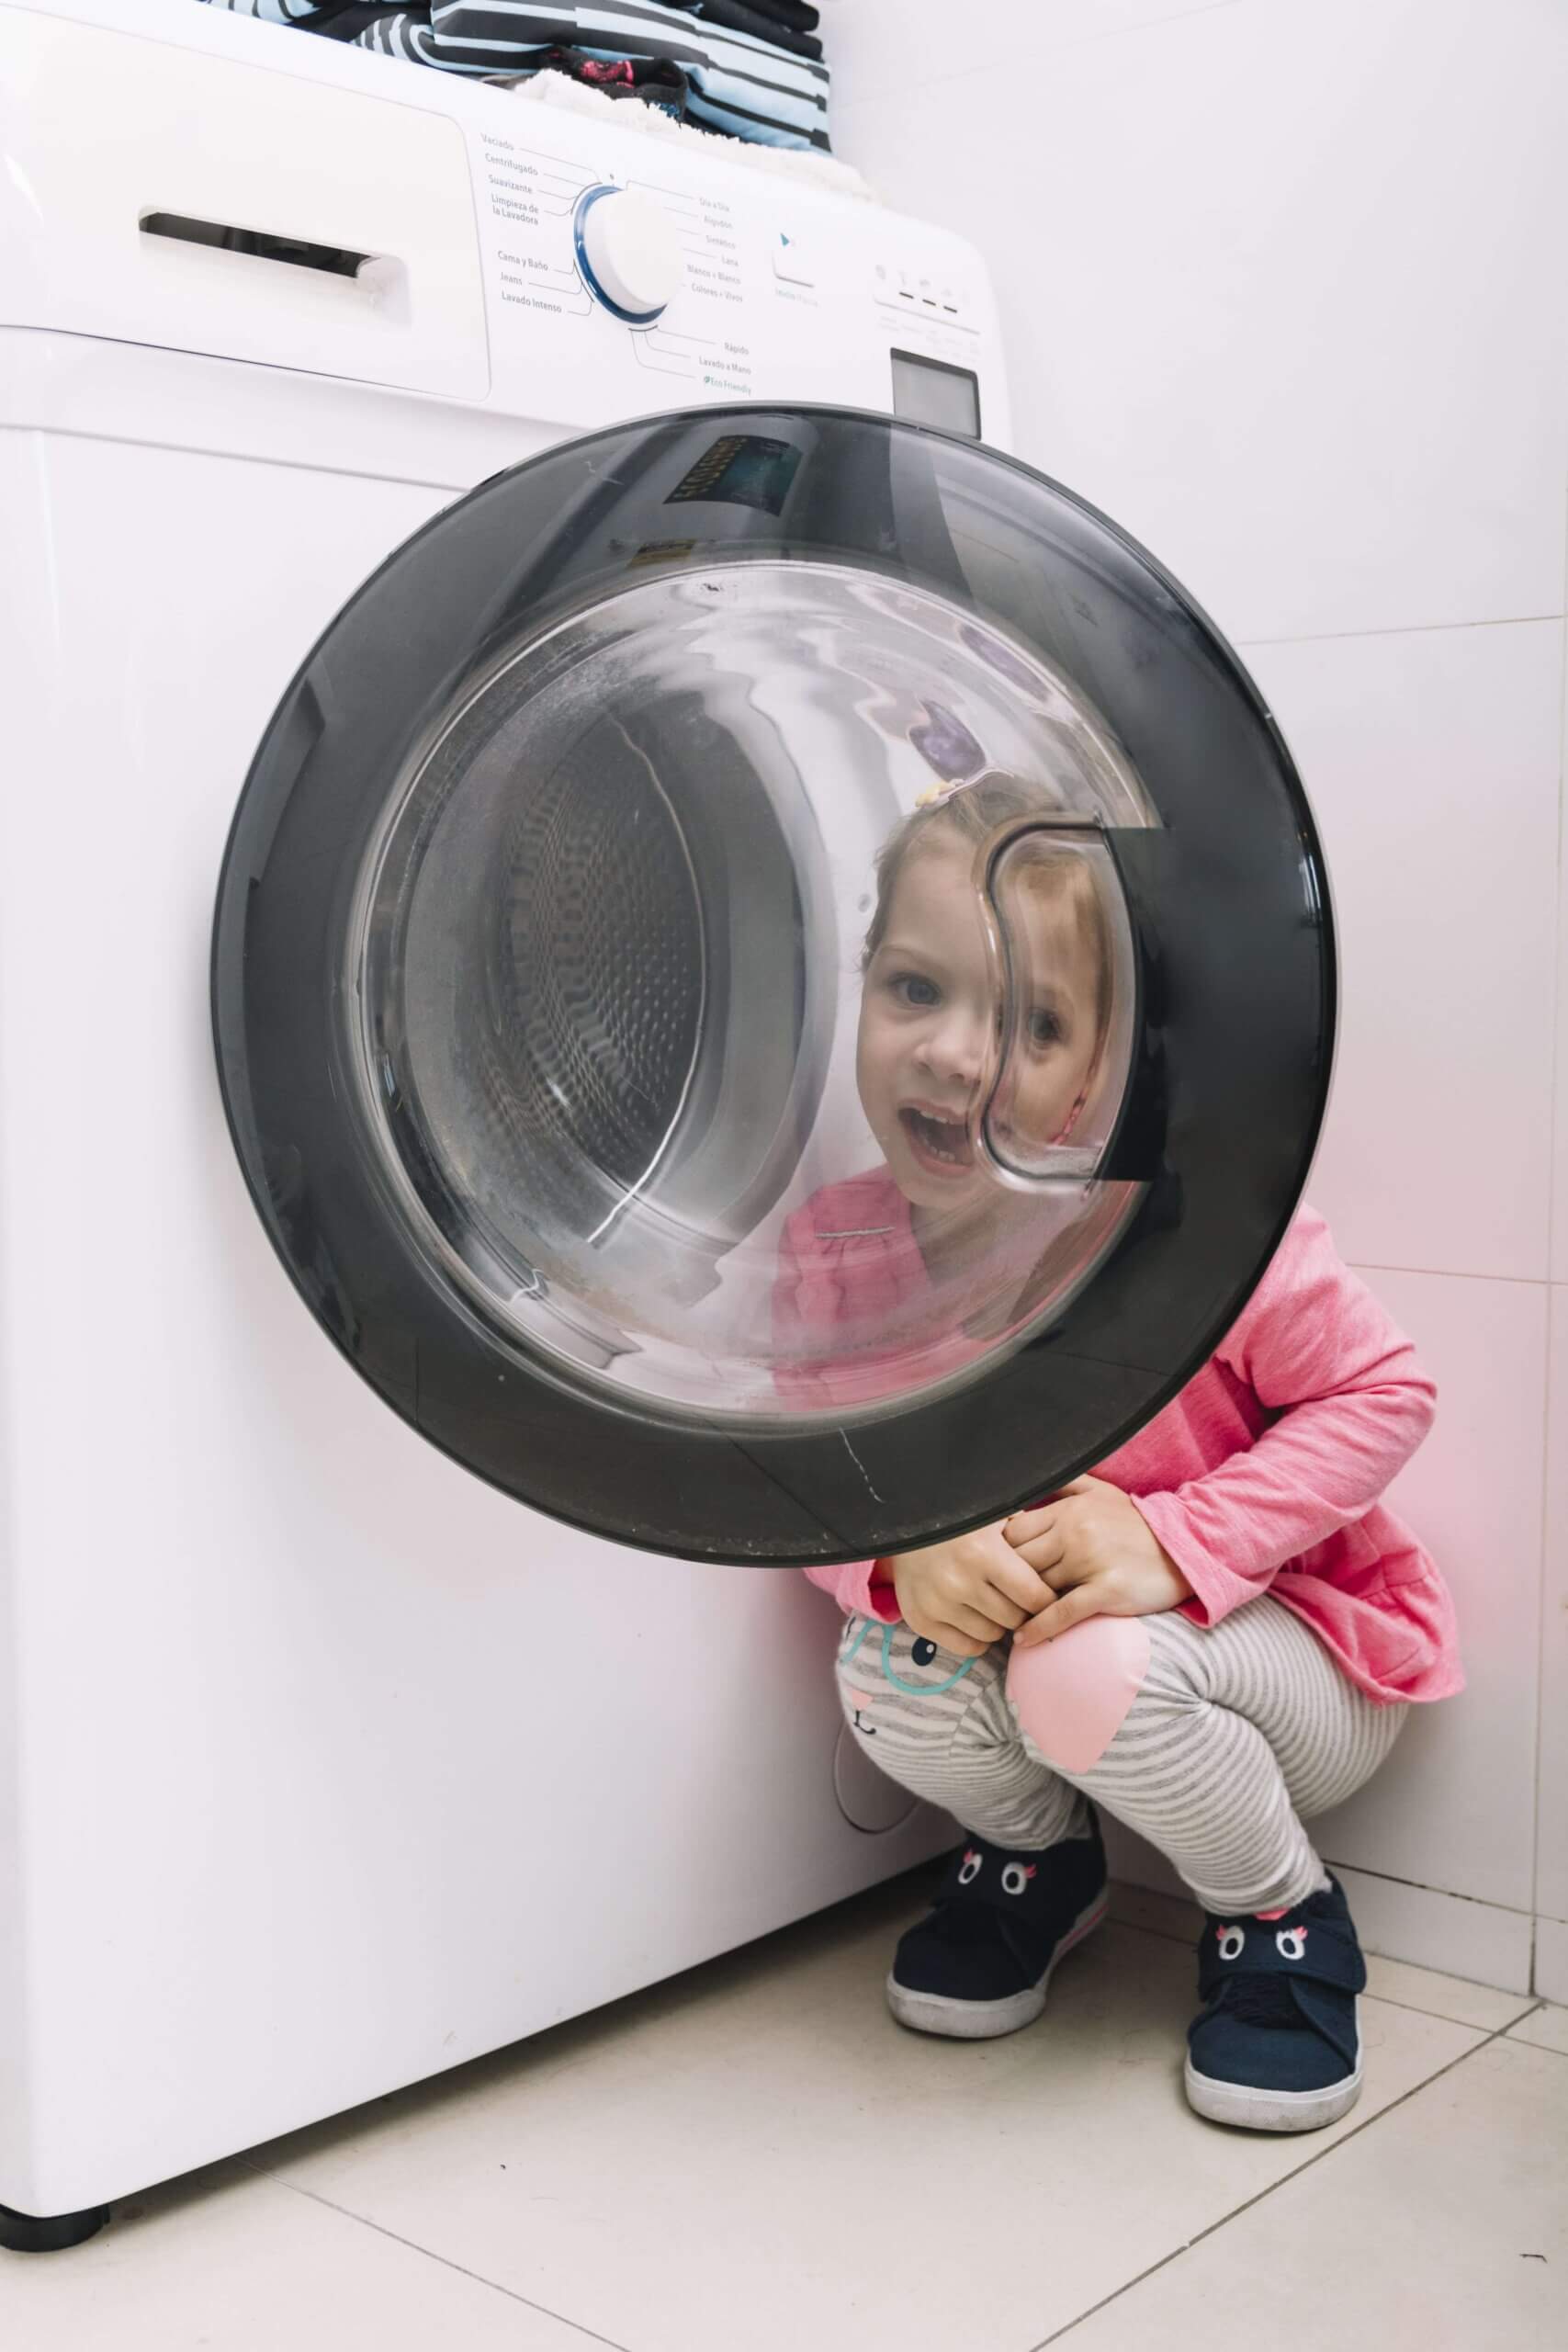 Maintenance tips for washing machines